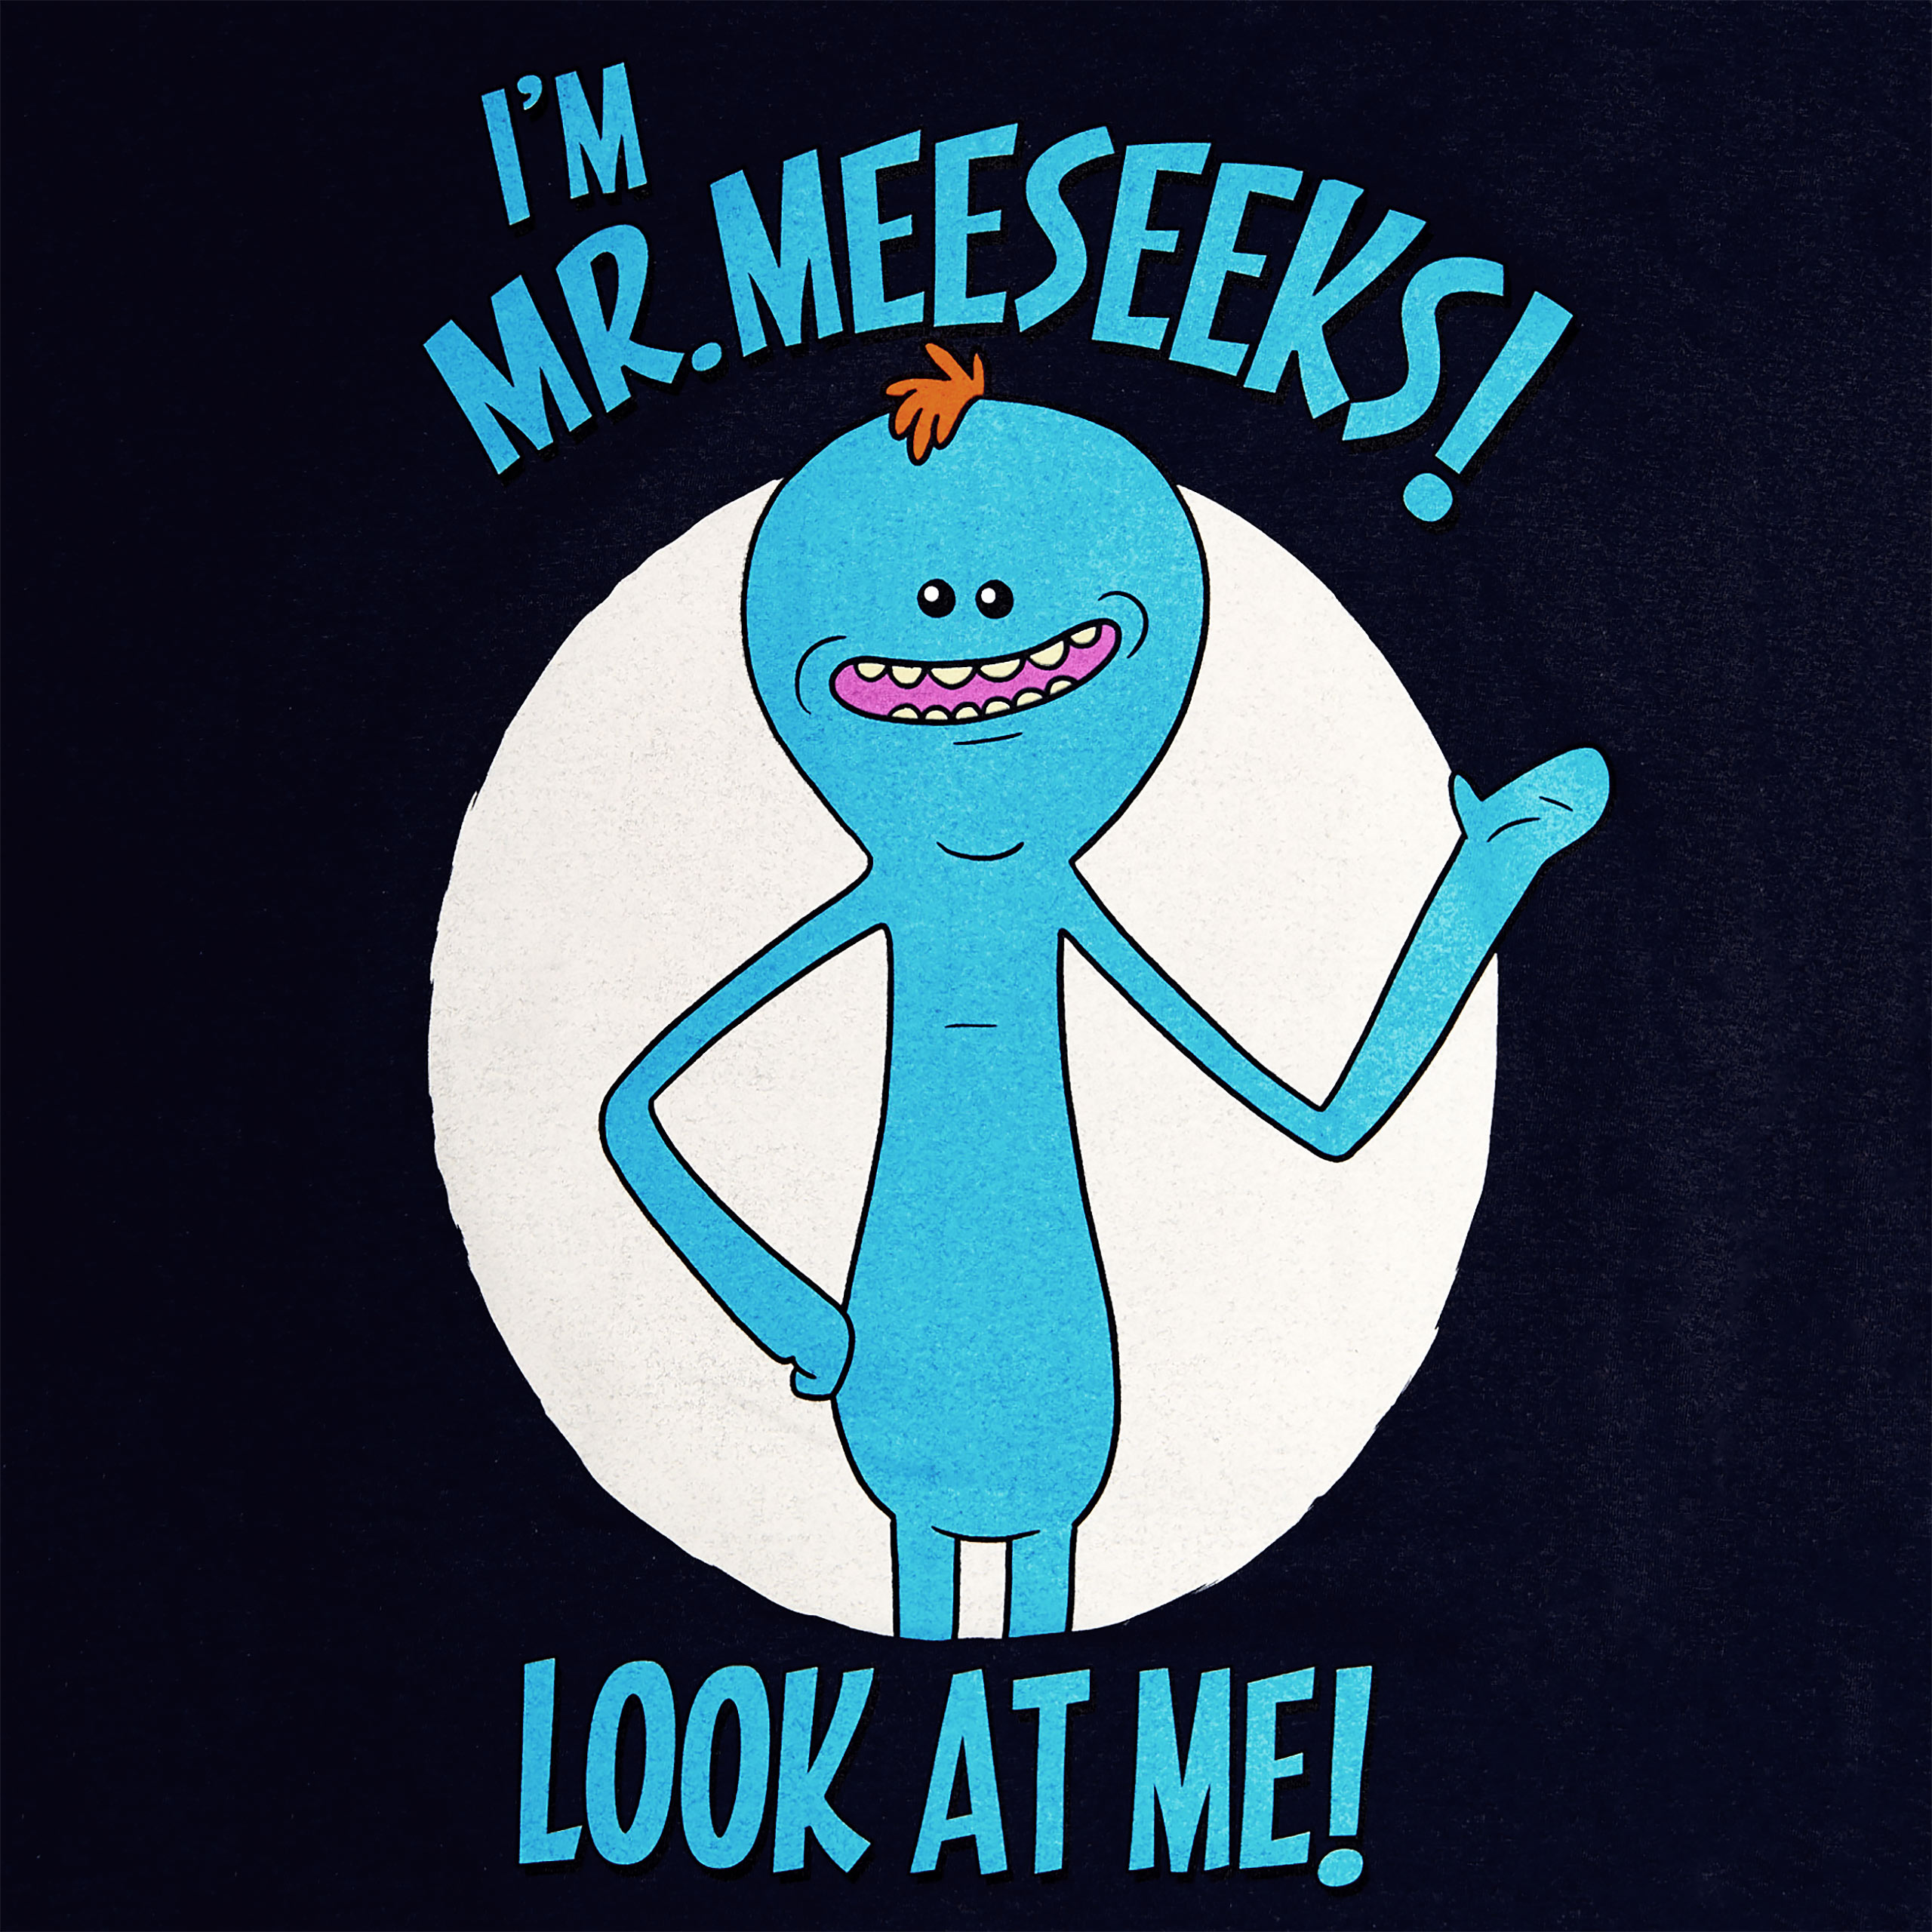 Rick and Morty - Mr. Meeseeks T-Shirt blau